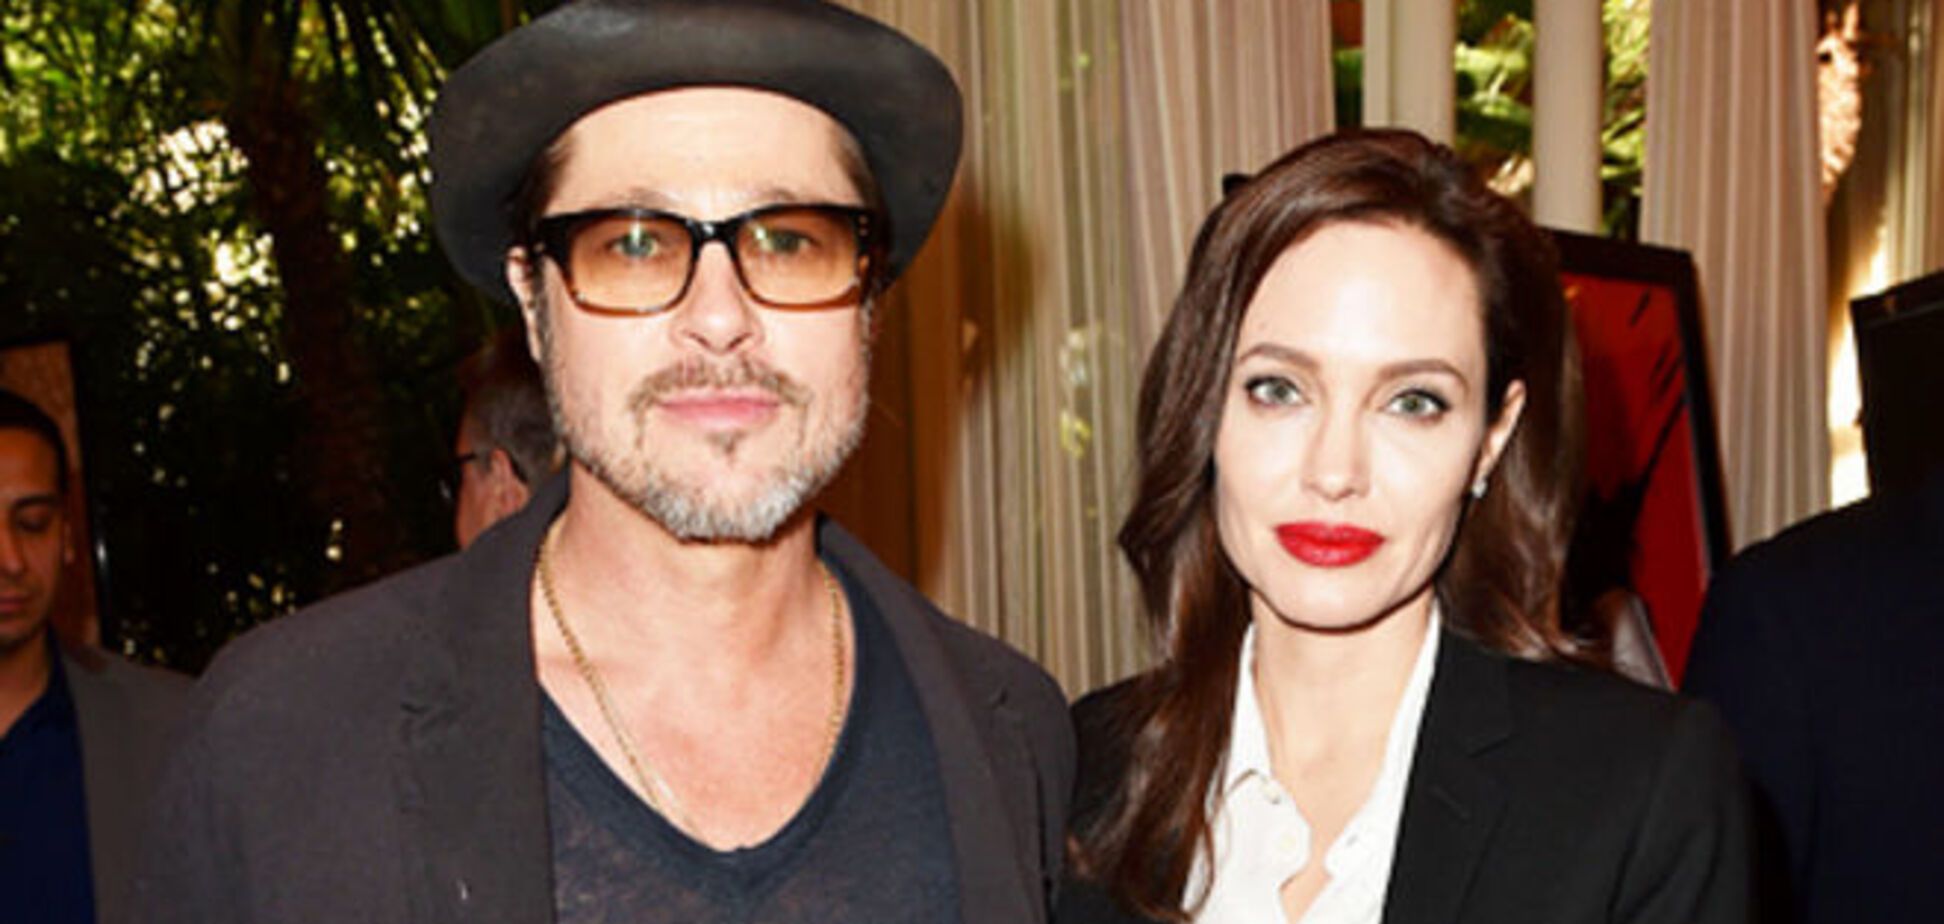 Анджелина Джоли и Брэд Питт усыновят ребенка до конца лета - СМИ